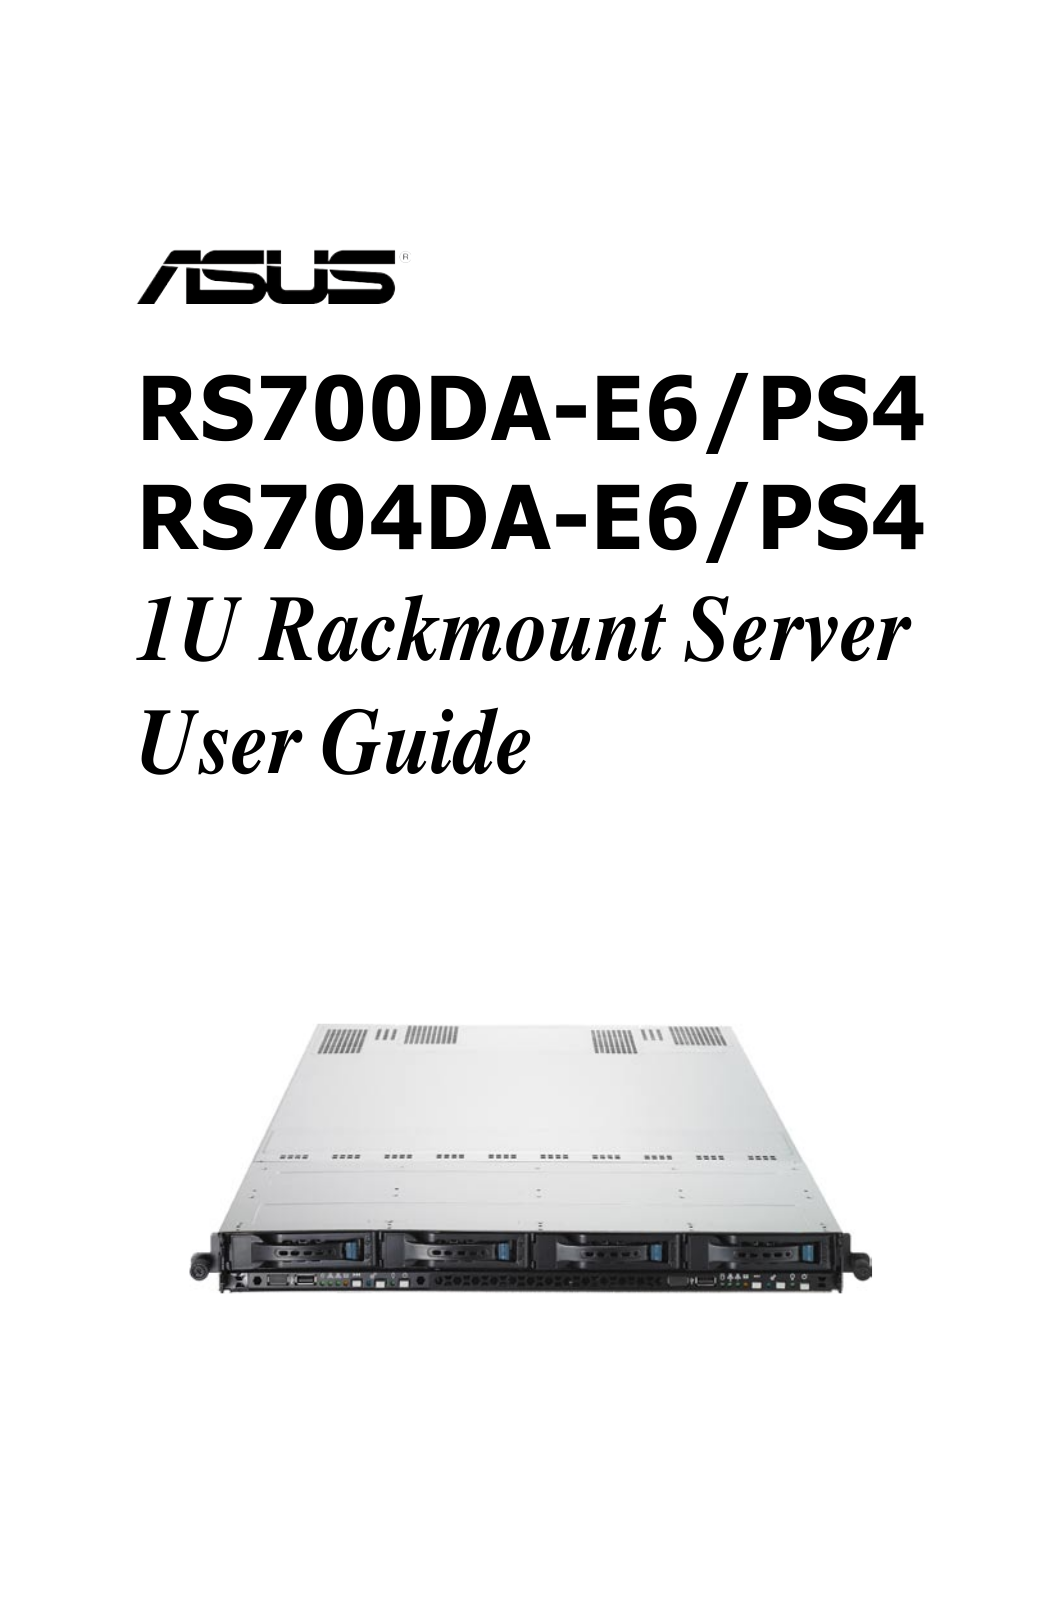 Asus RS700DA-E6/PS4, RS704DA-E6/PS4 Manual